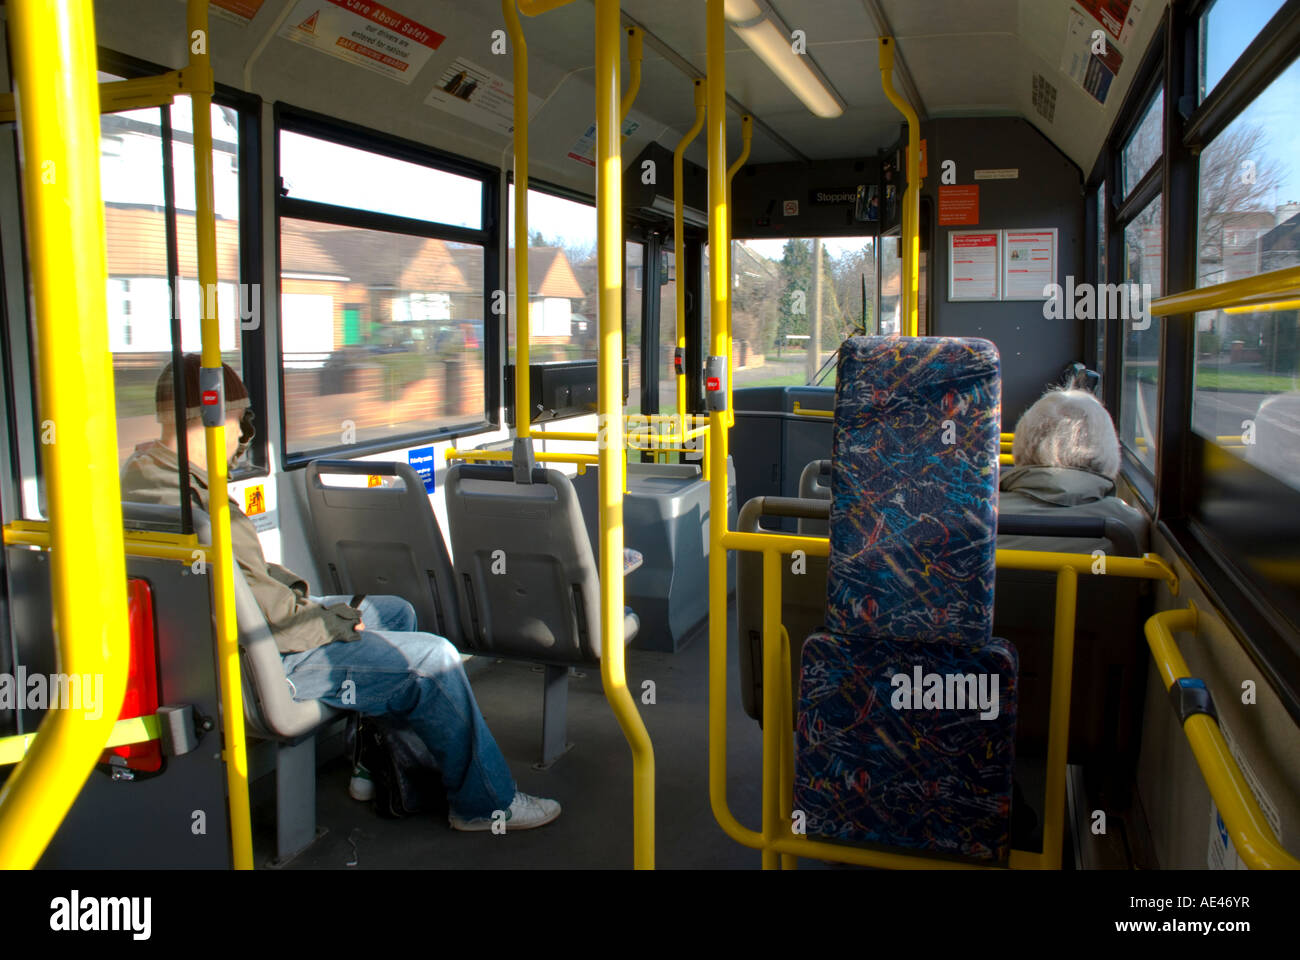 Interior of a public bus England United Kingdom Europe 